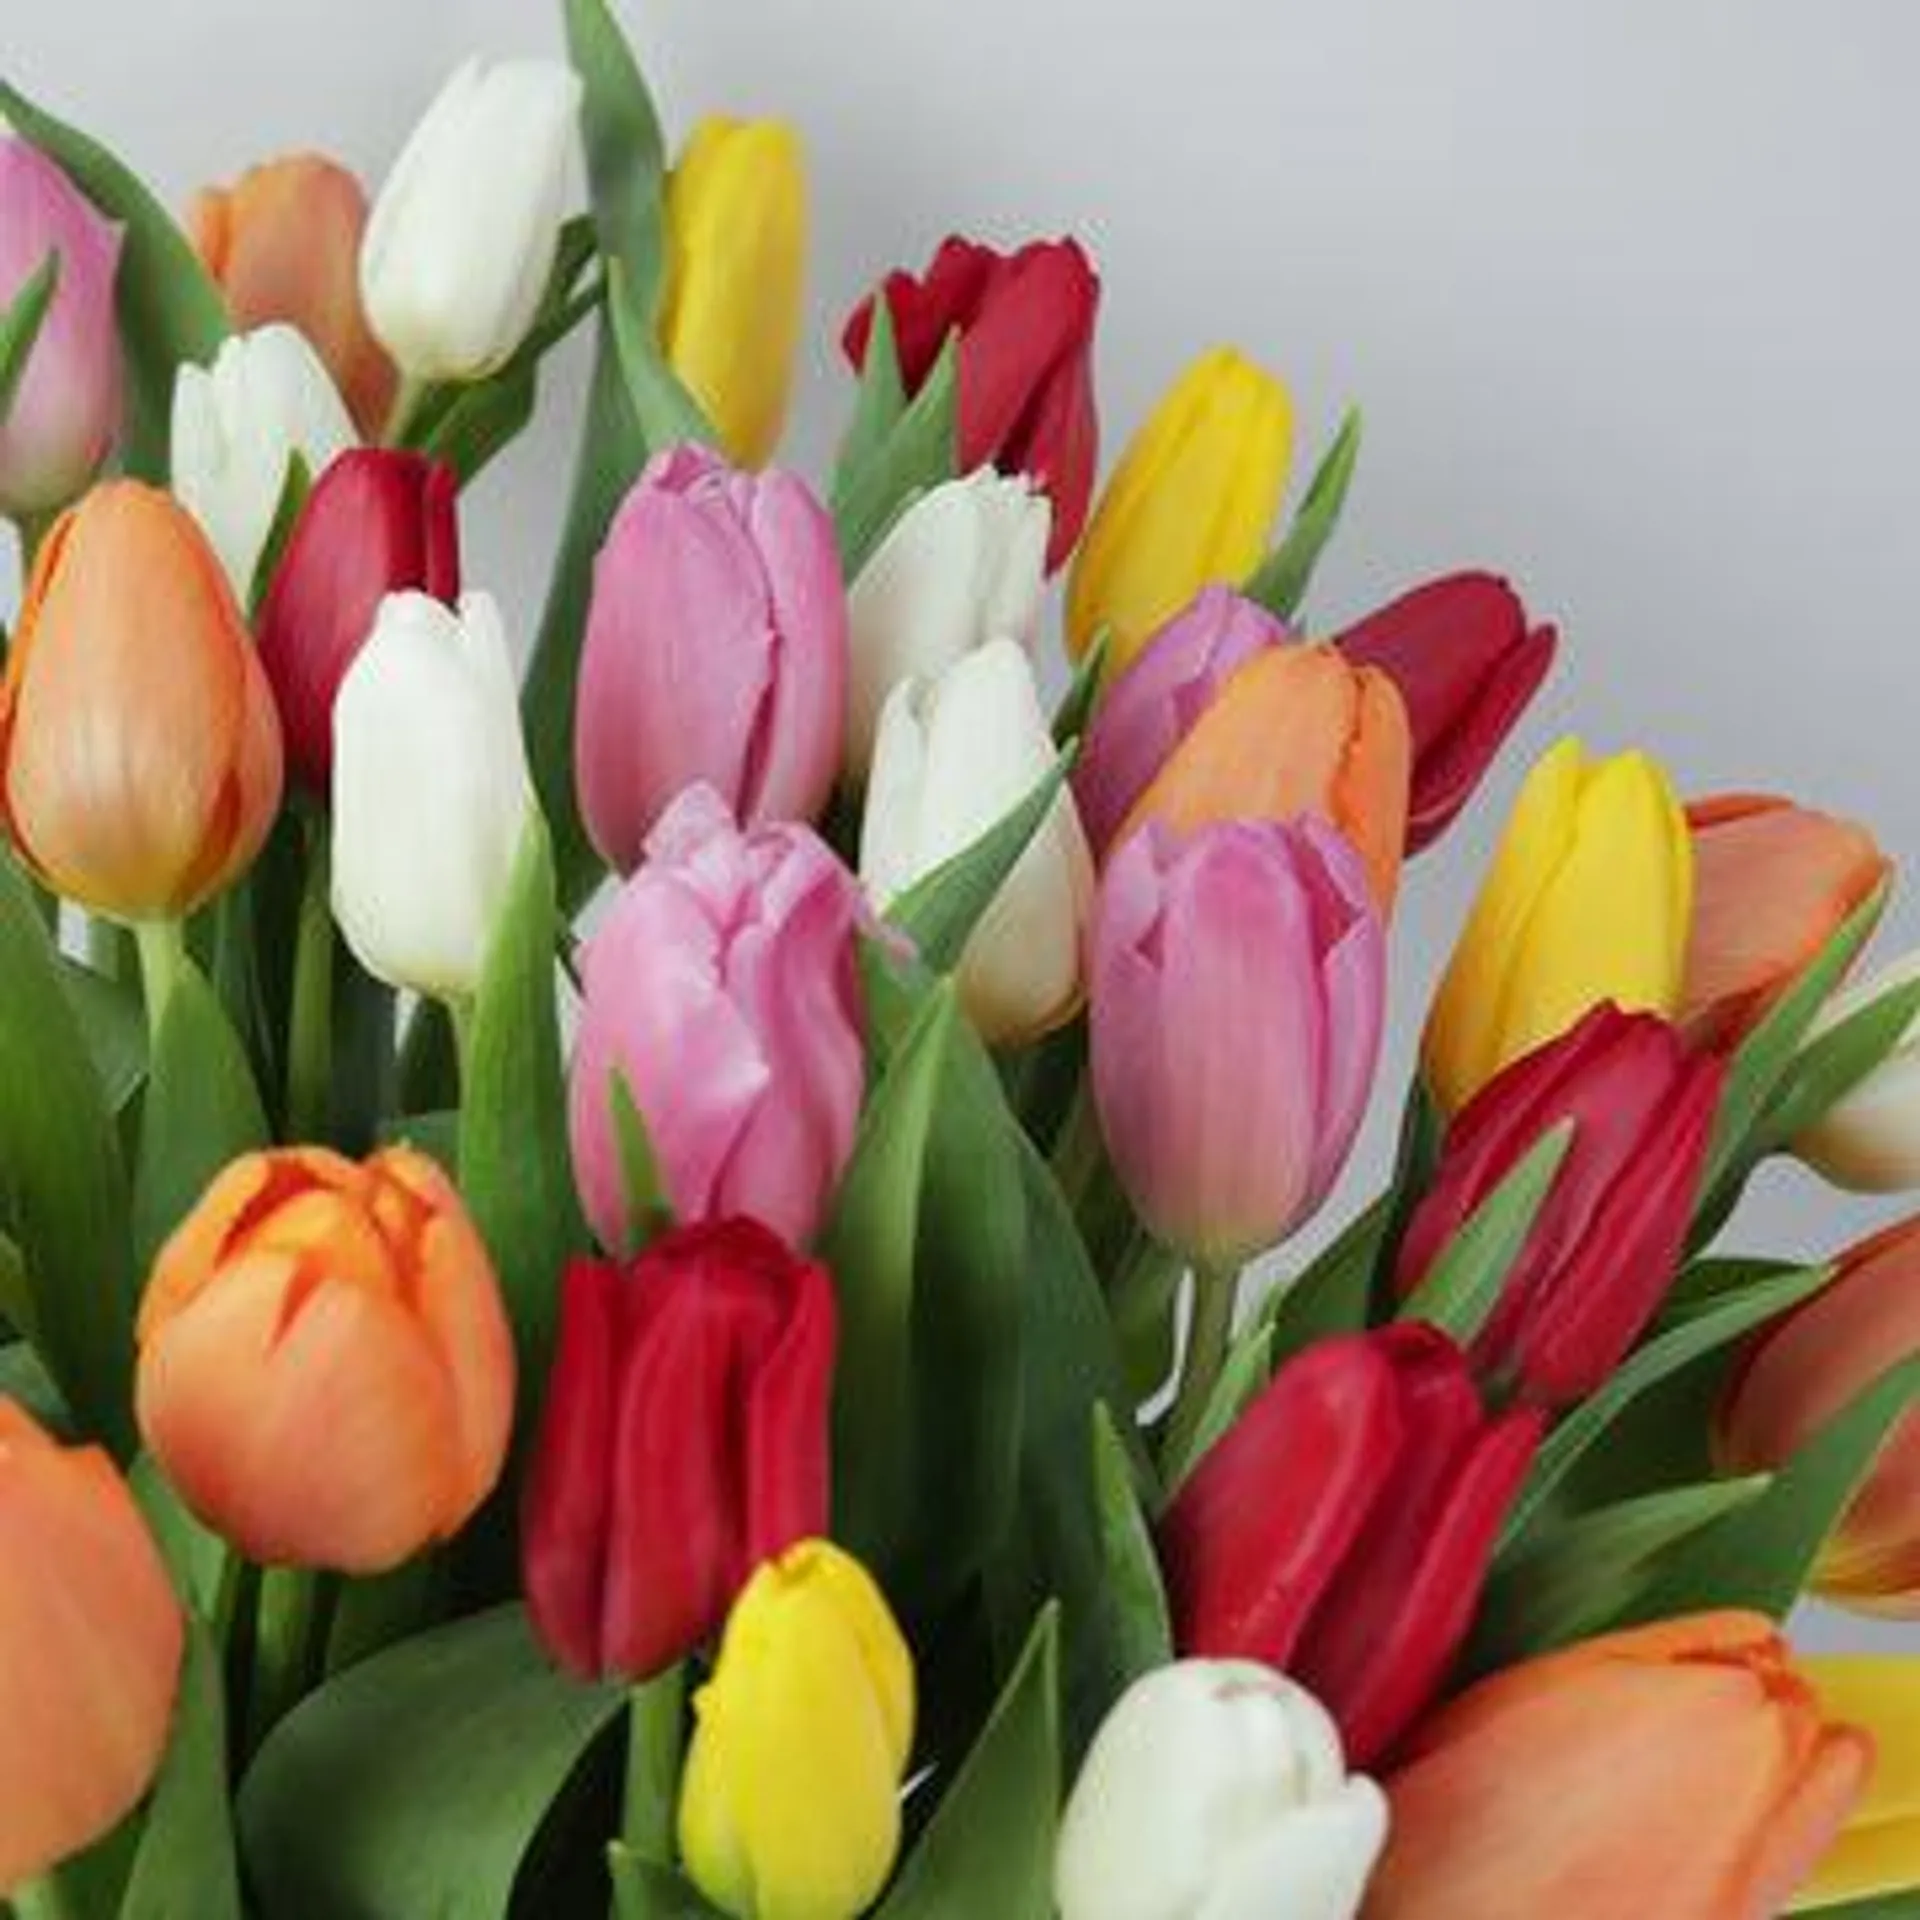 Organic Mixed Tulips